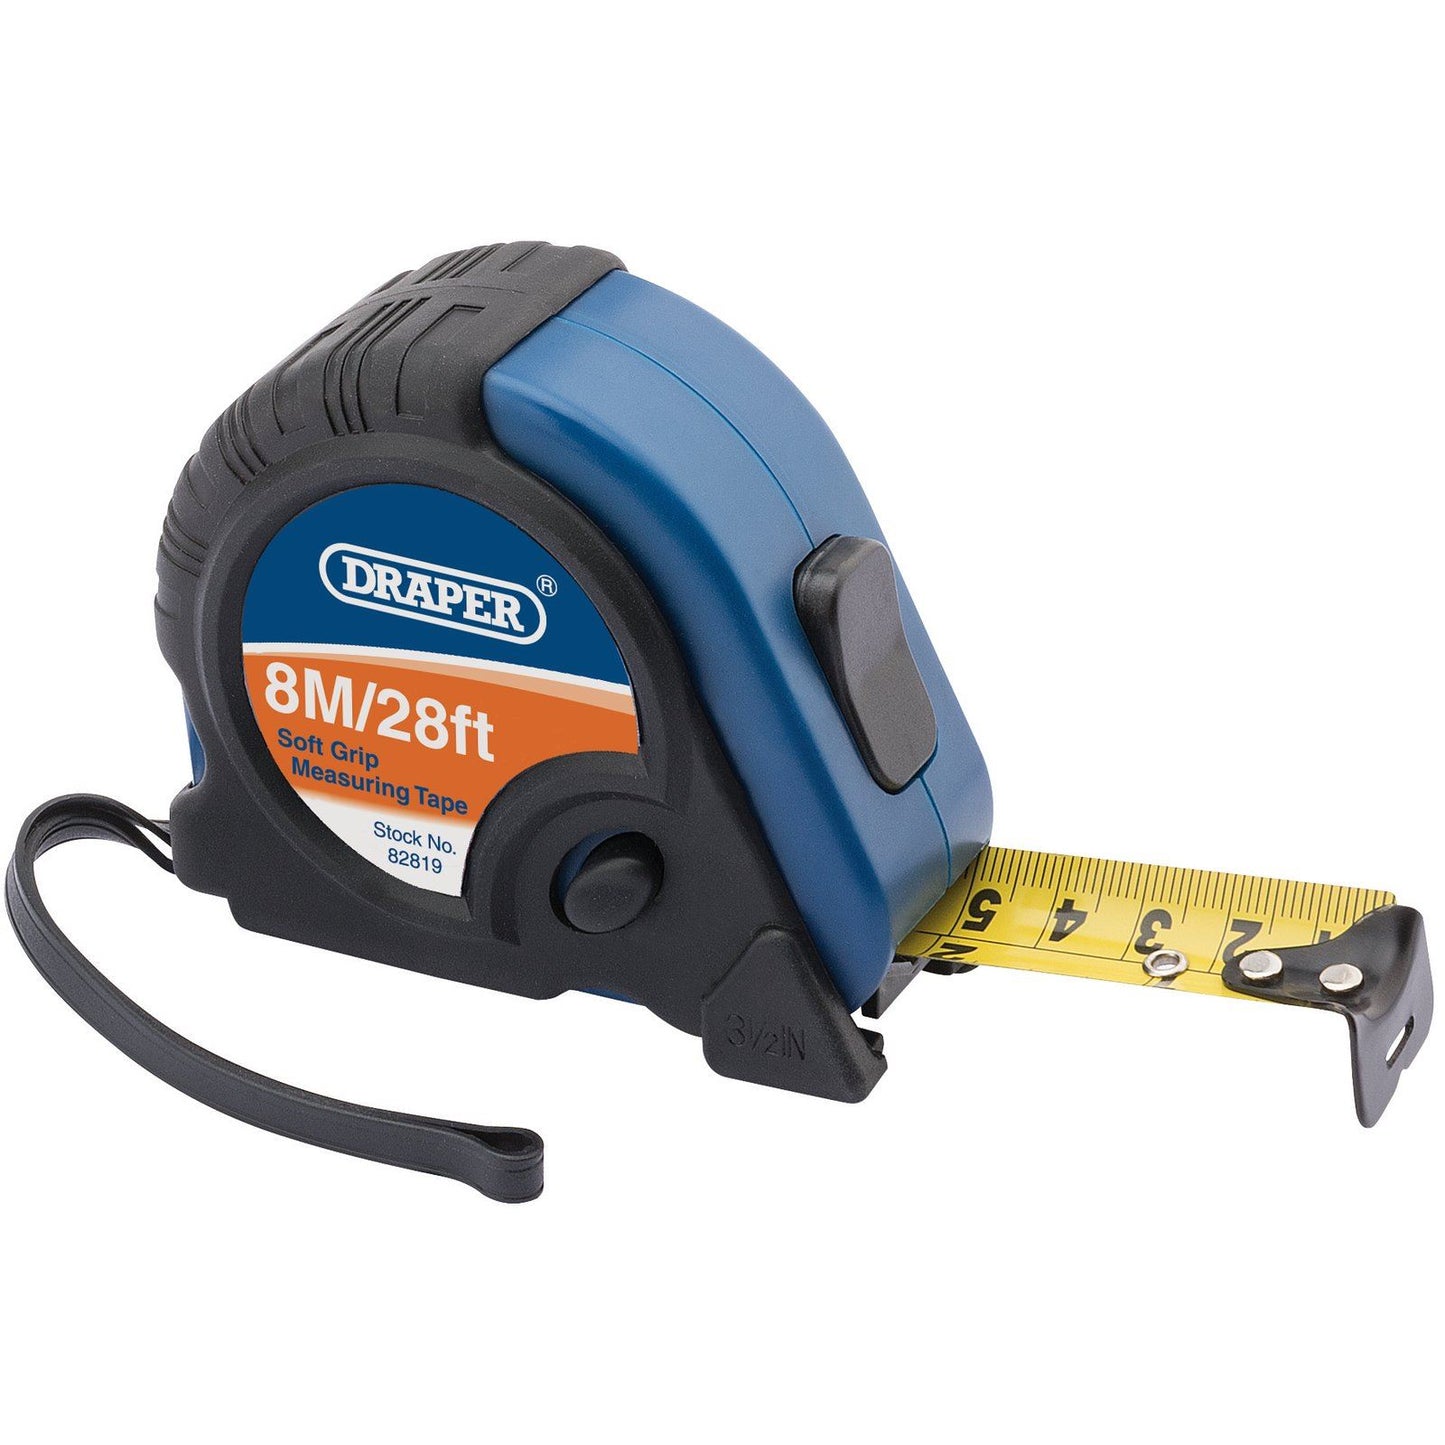 Draper Professional Measuring Tape (8M/25ft) DMTRQT - 82819